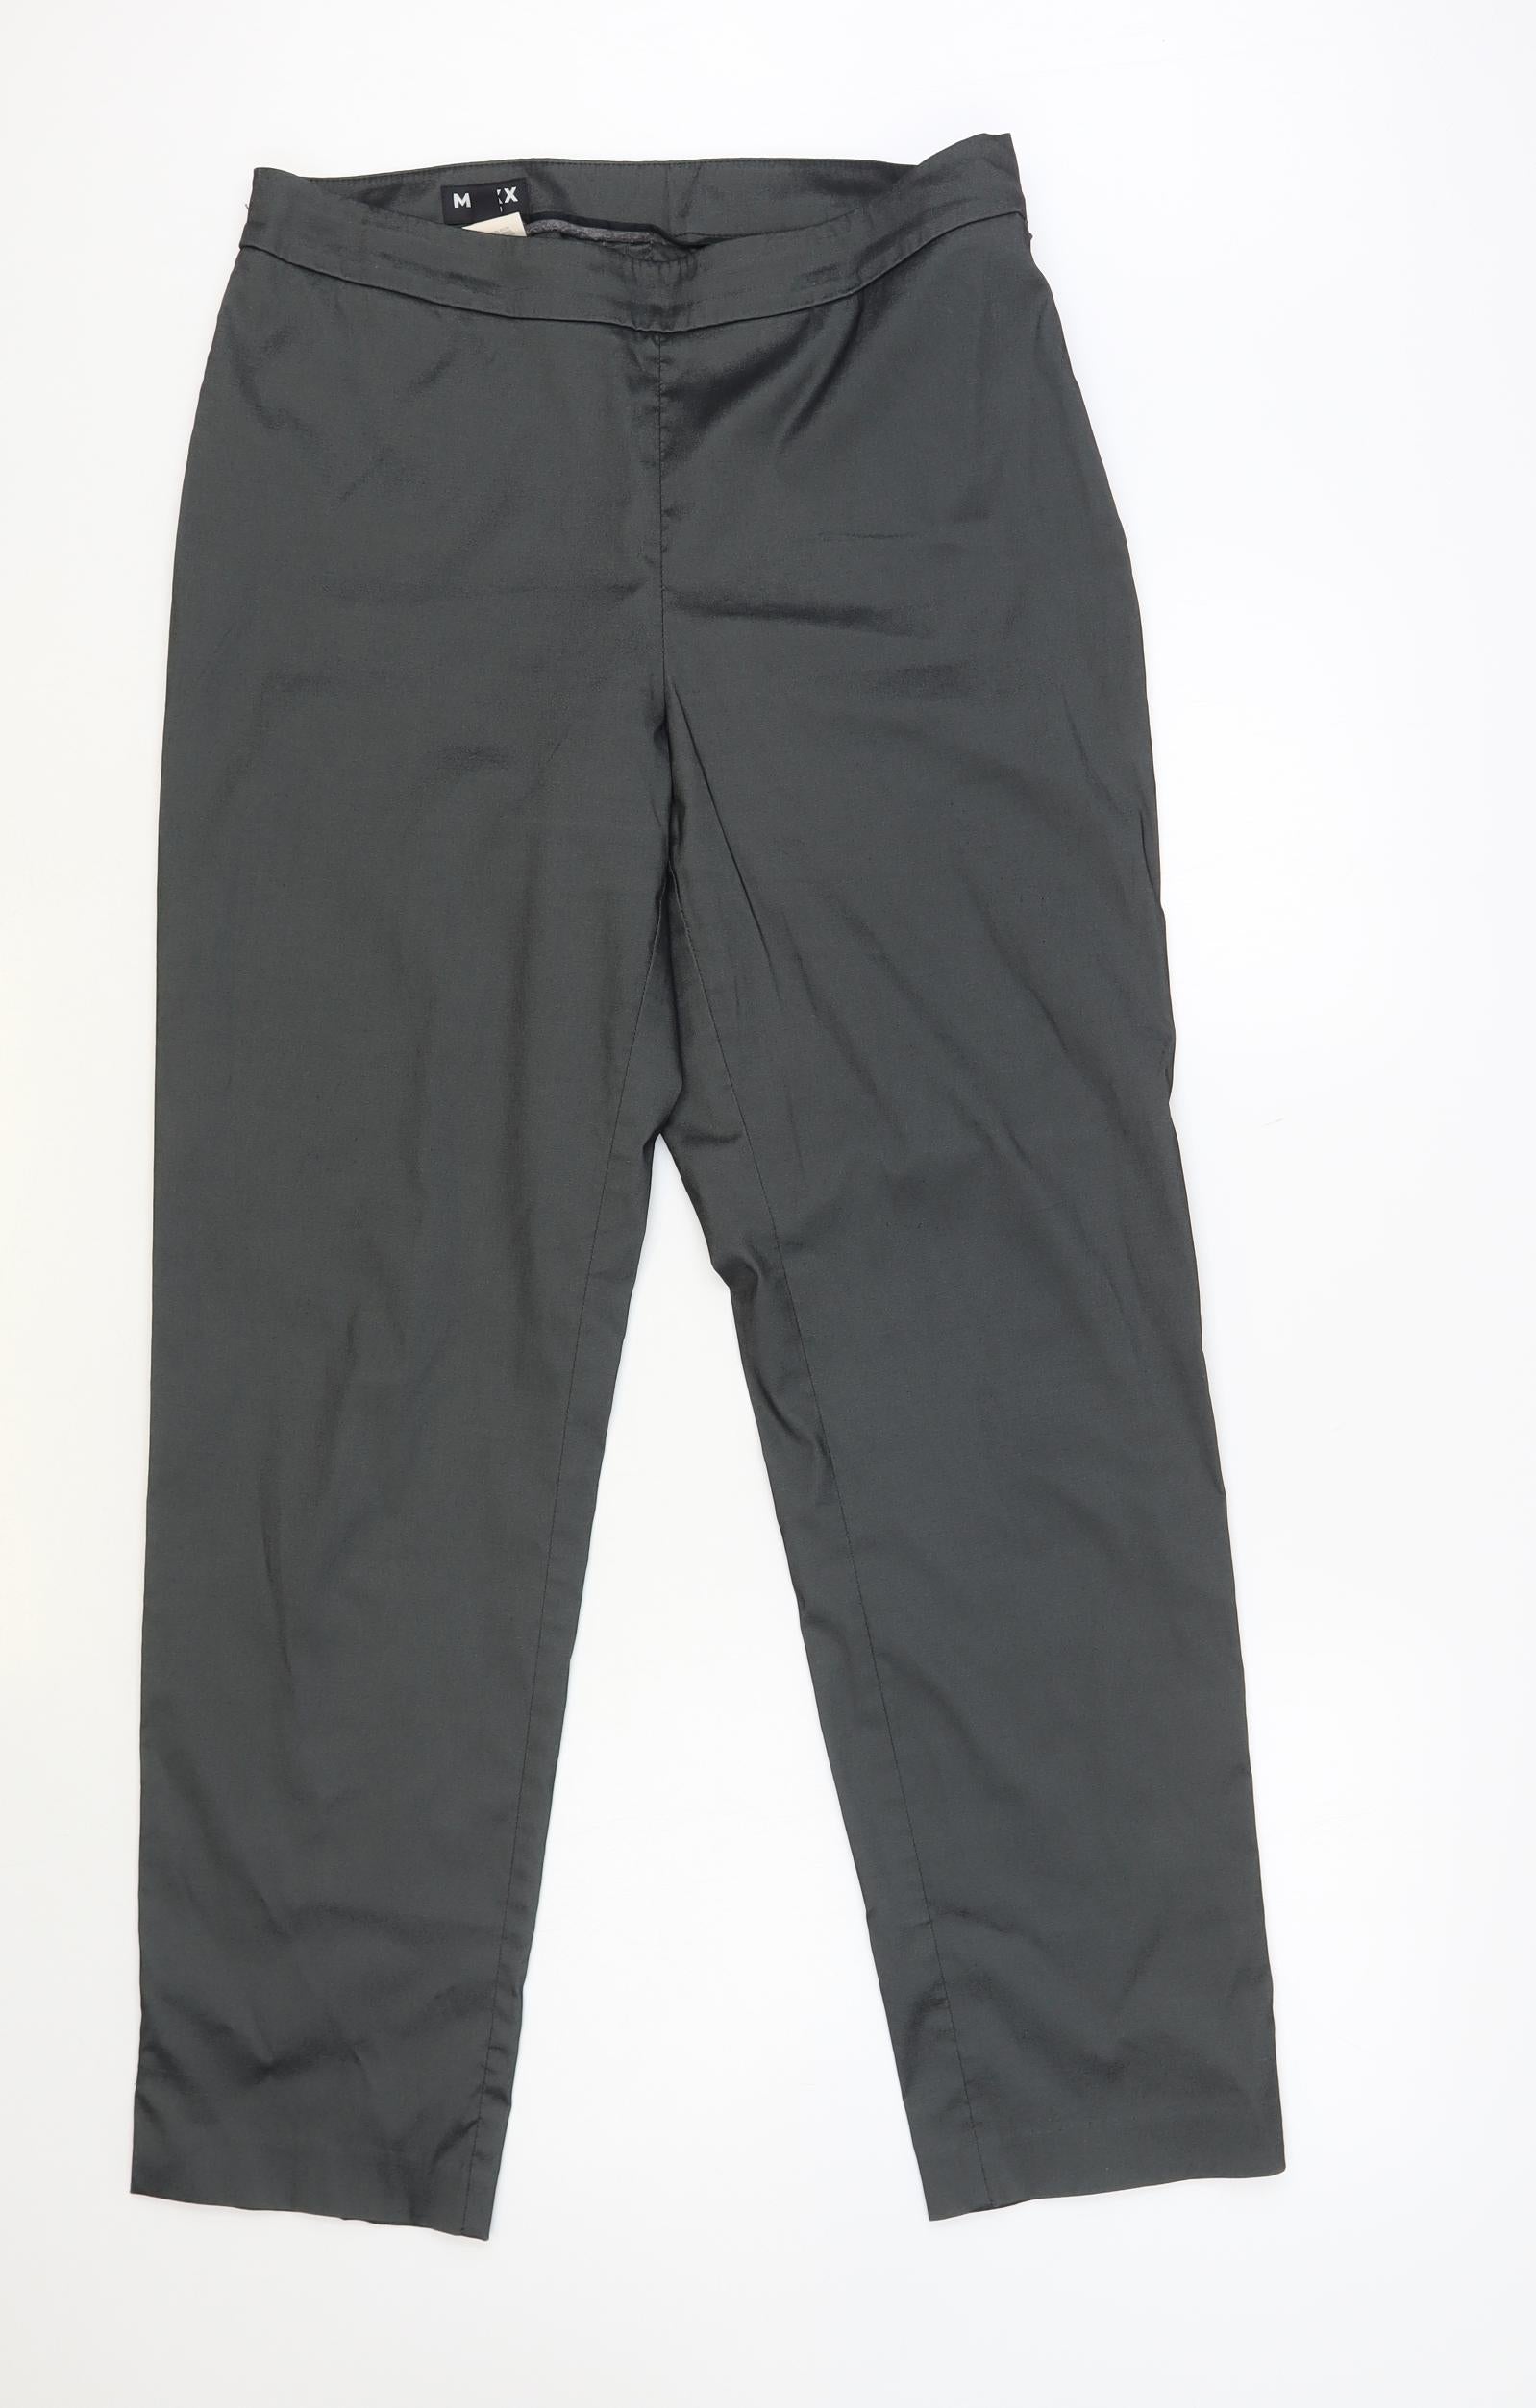 Mexx Womens Grey Nylon Trousers Size 16 L31 in Regular Zip